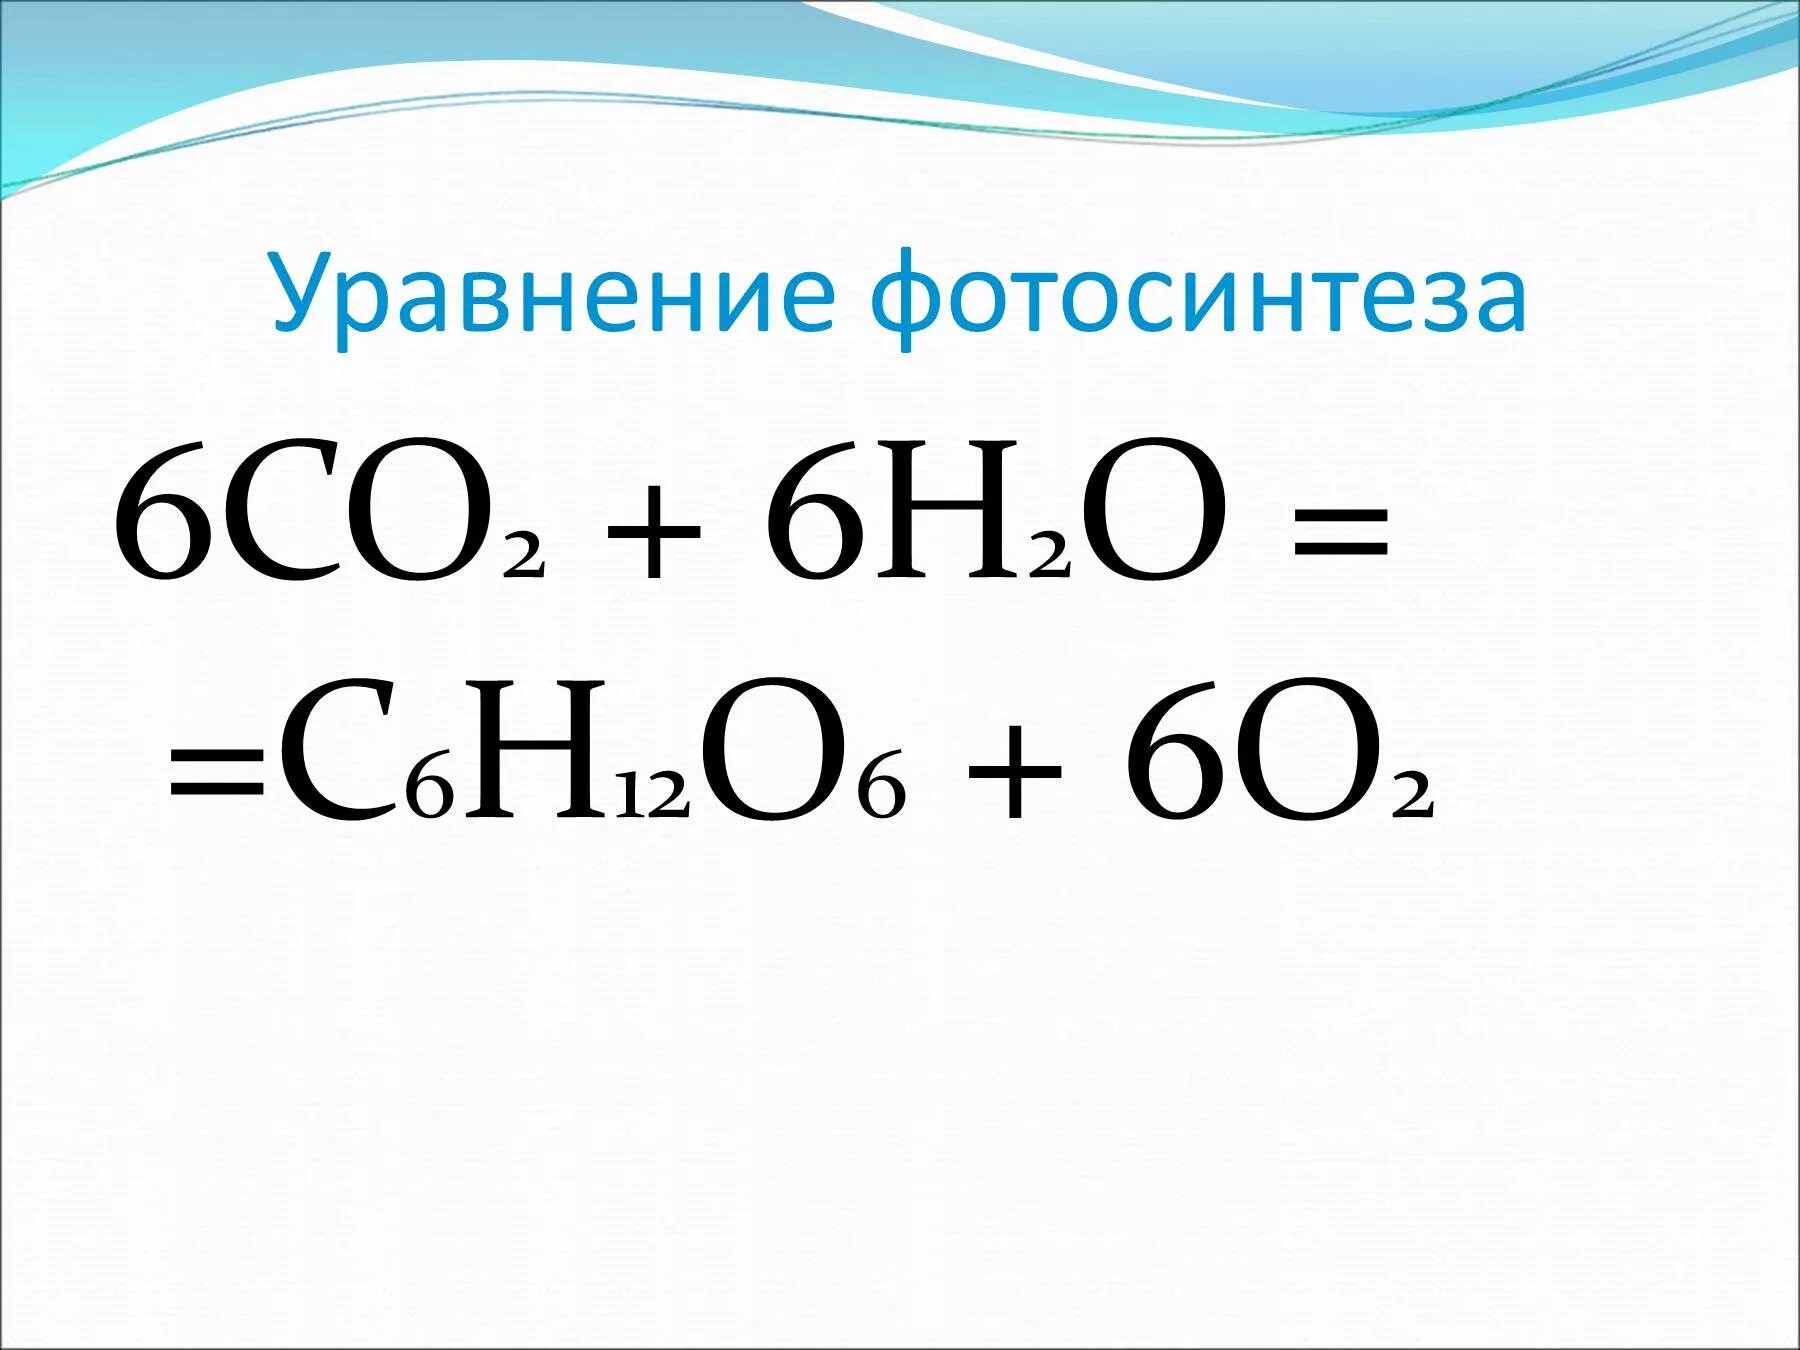 Co2 h2o фотосинтез. Уравнение фотосинтеза. Урланентп фотосинтеза. Реакция фотосинтеза уравнение.